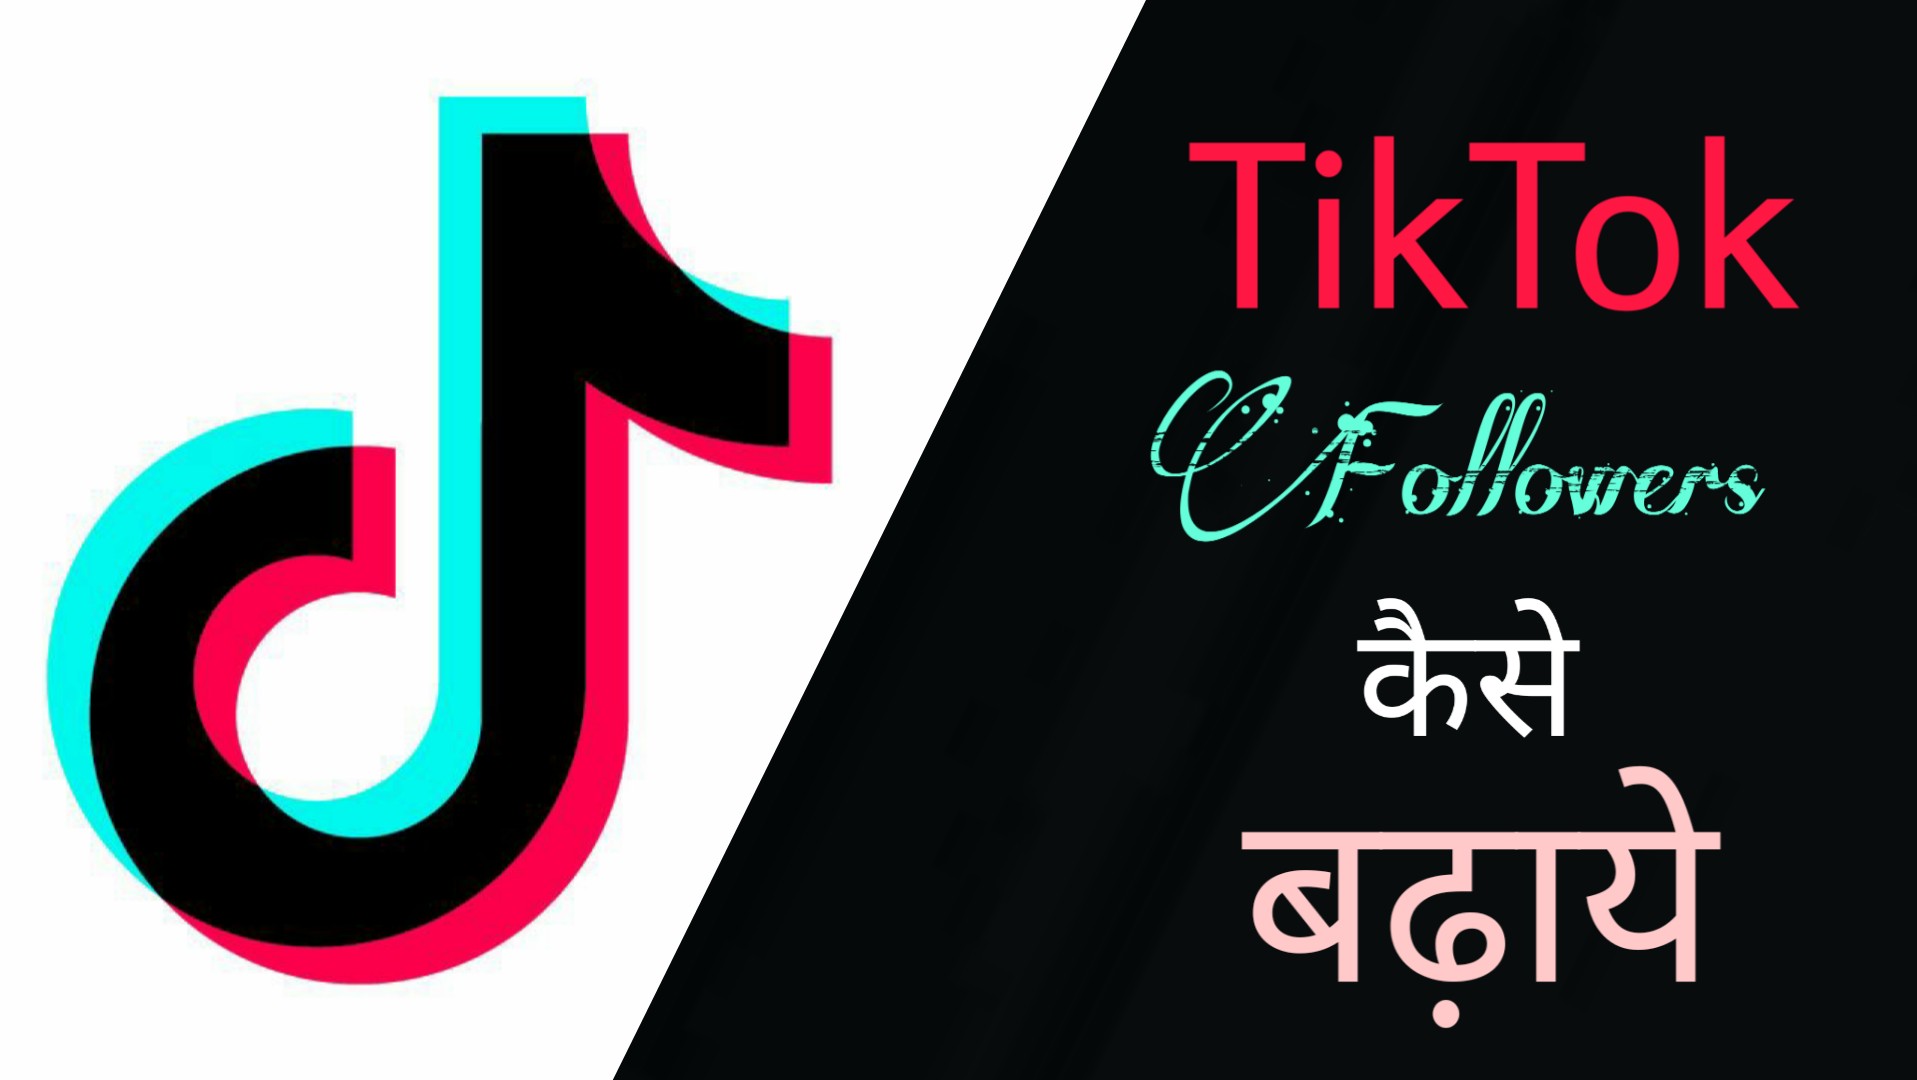 Tik Tok Par Like or Followers Kaise Badhaye In Hindi These Methods Will Go Viral | How to Gain on Tik Tok Like or Followers Tips and Tricks | टिक टोक पर वायरल कैसे होए